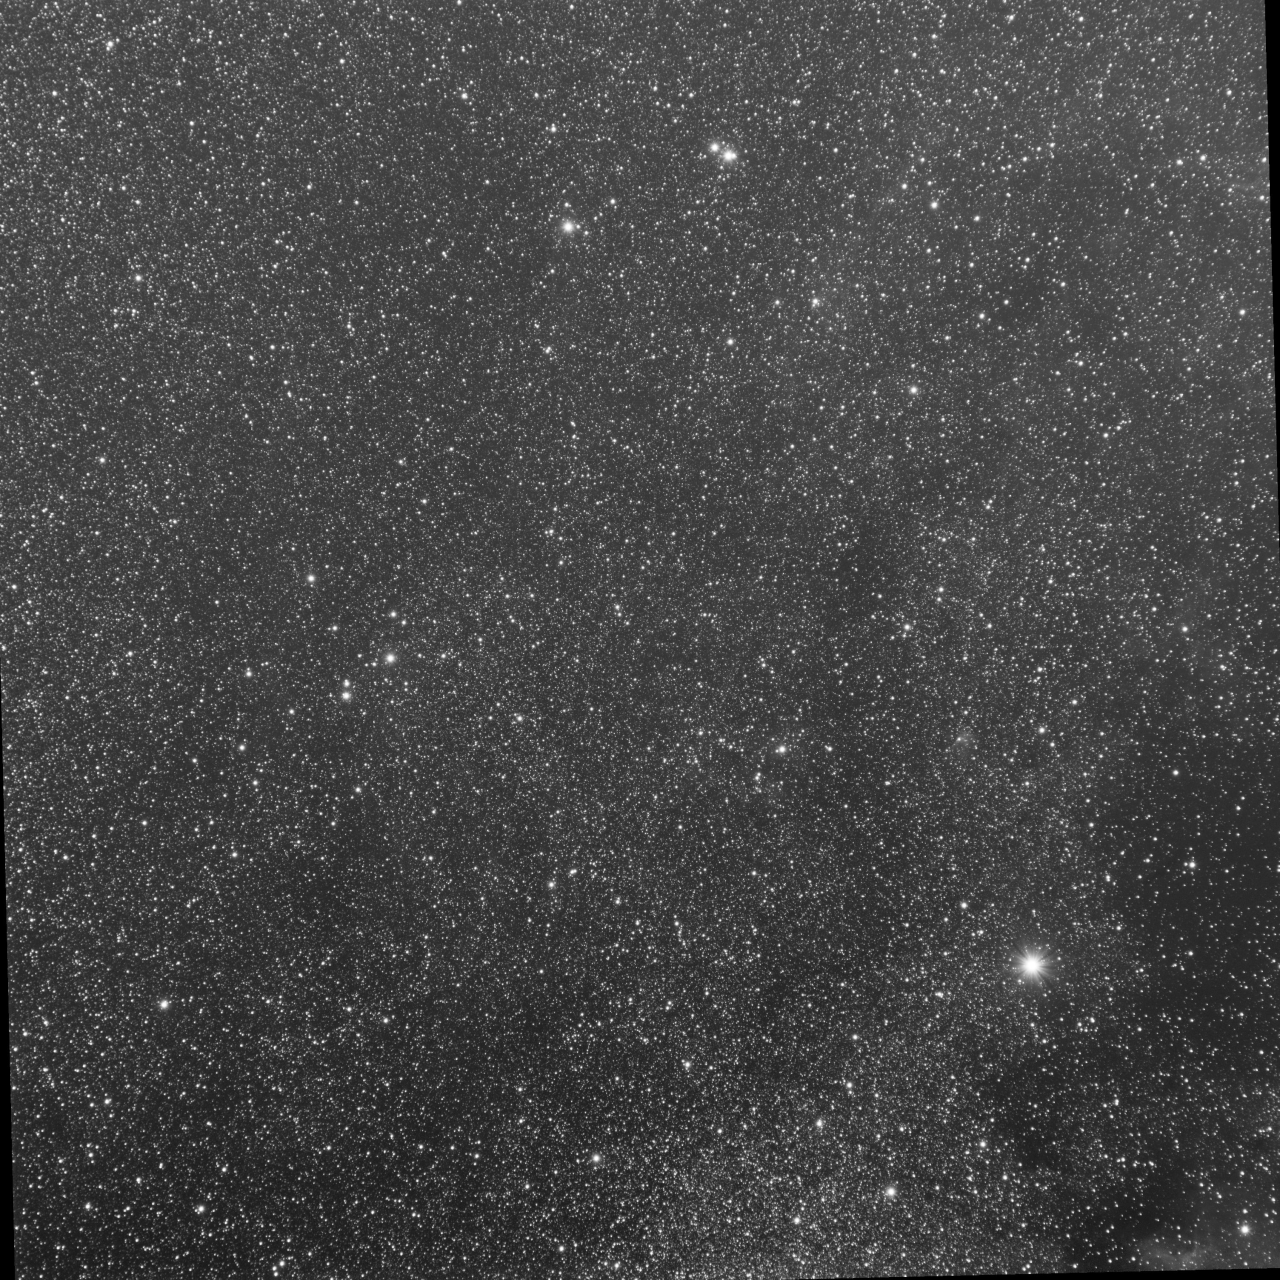 Cygnus near Sh2-115 - L